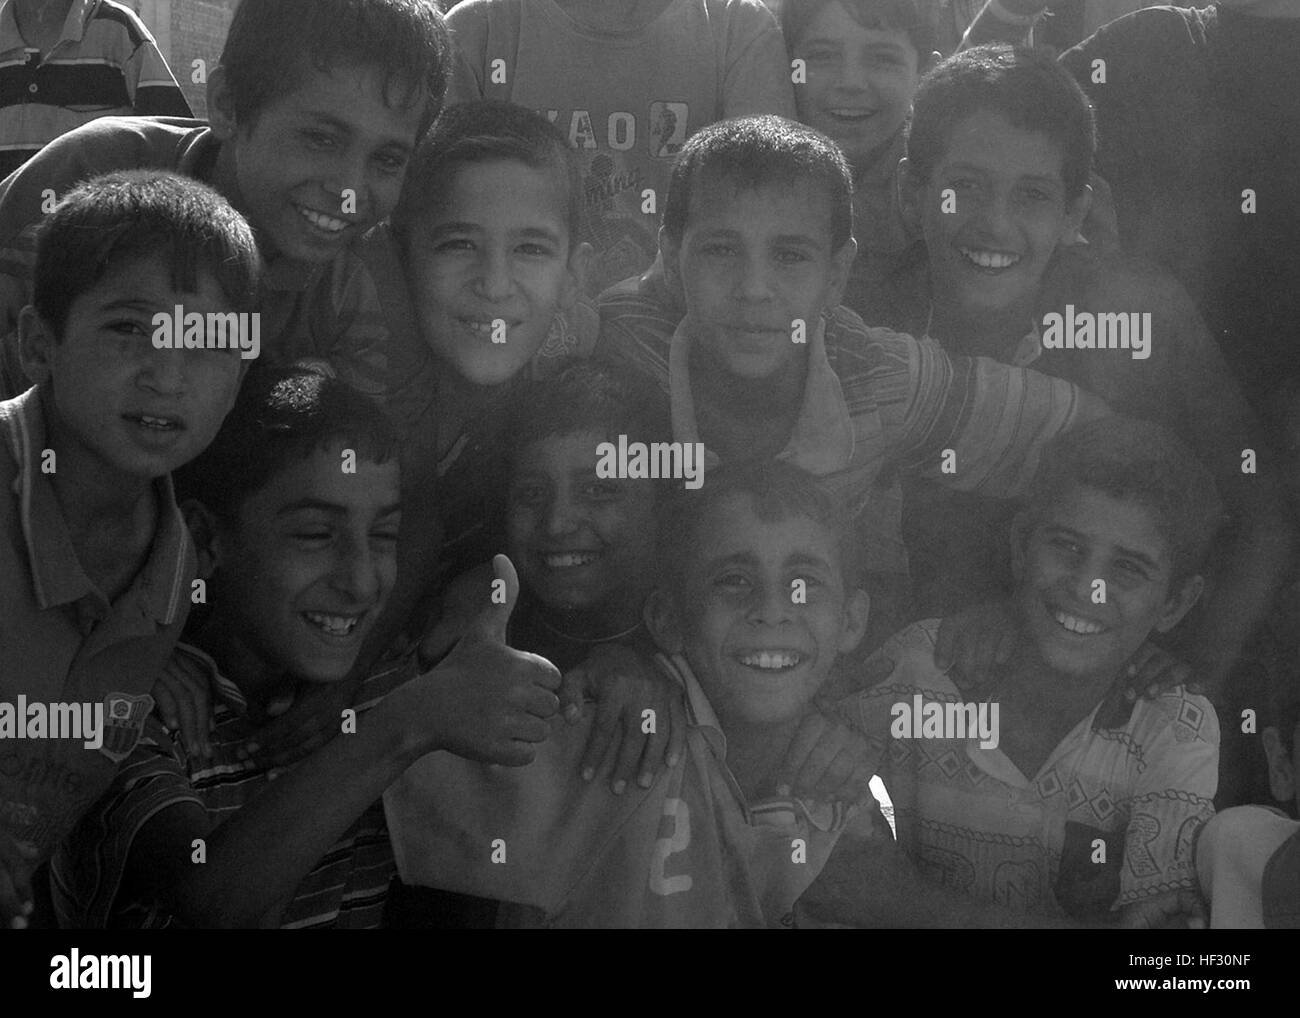 Al amarah iraq Black and White Stock Photos & Images - Alamy